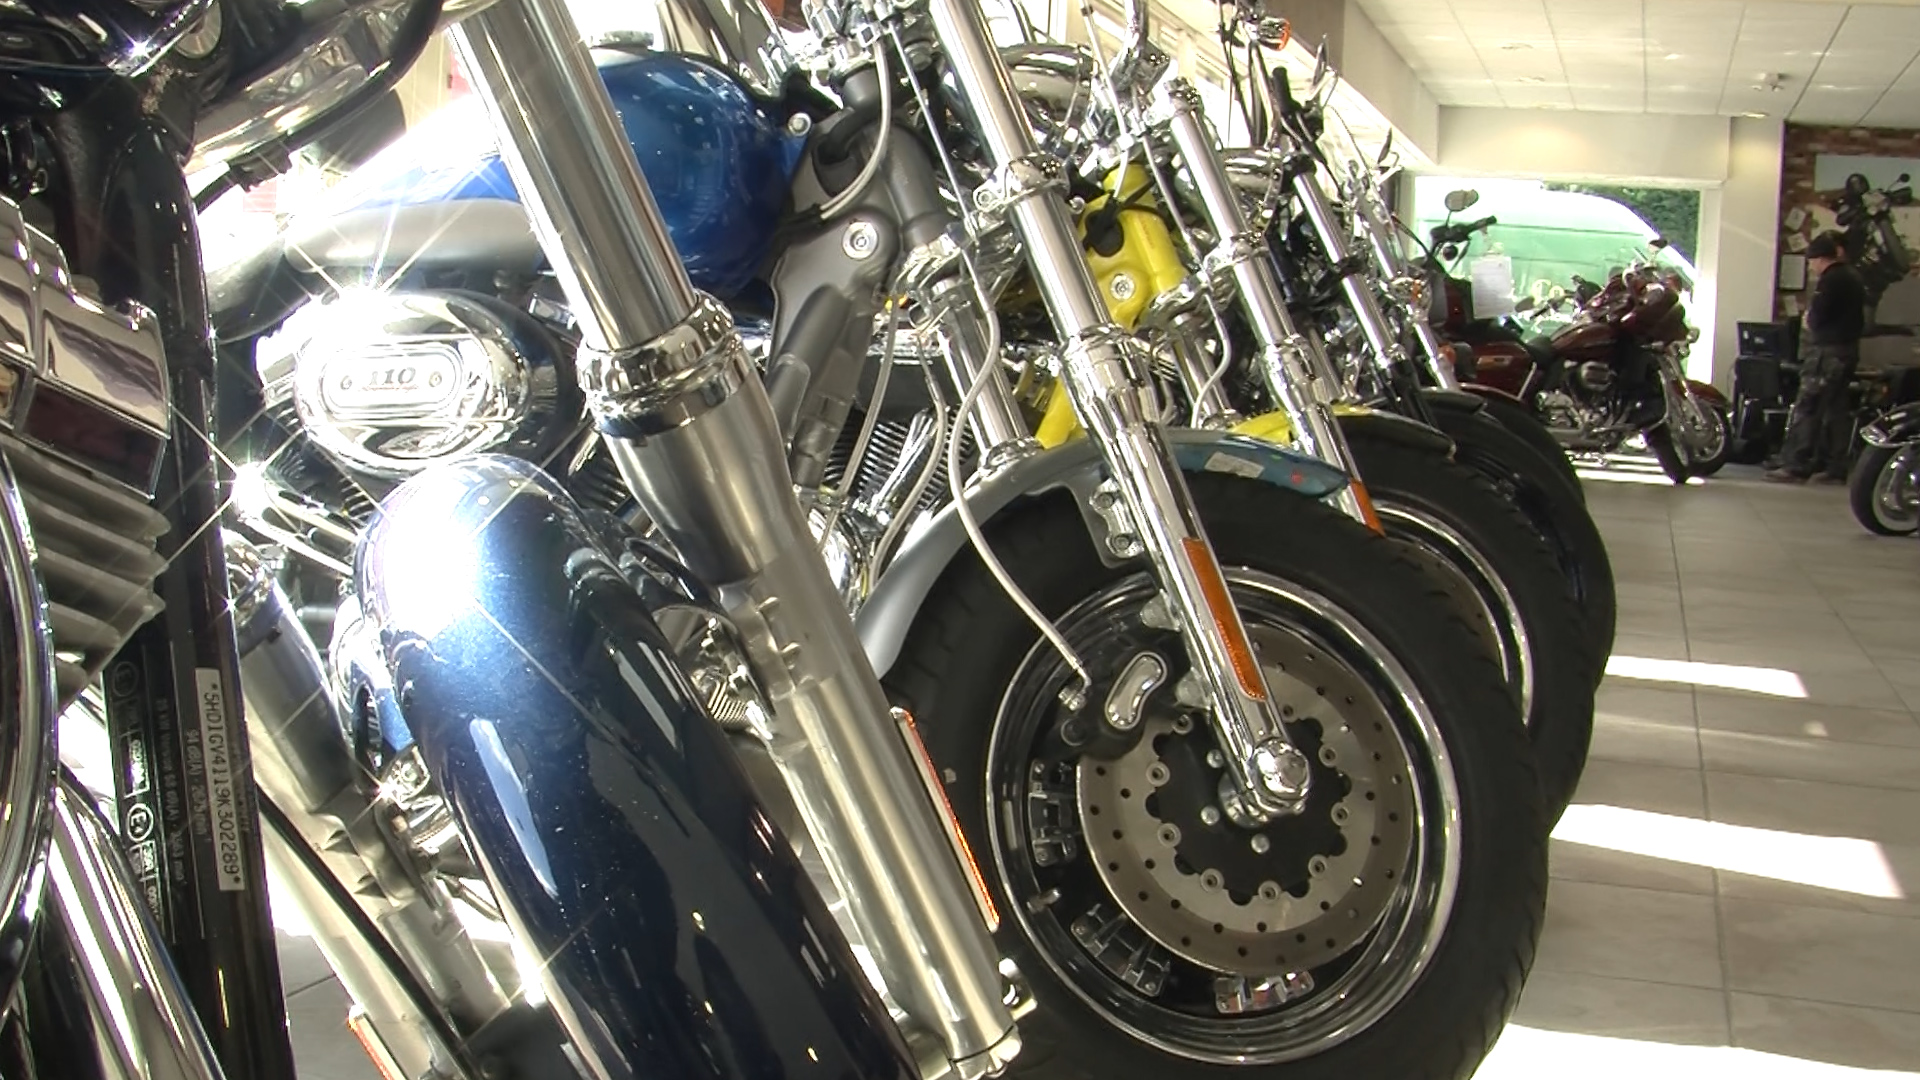 Harley Davidson show coming to Lincolnshire LSJ News